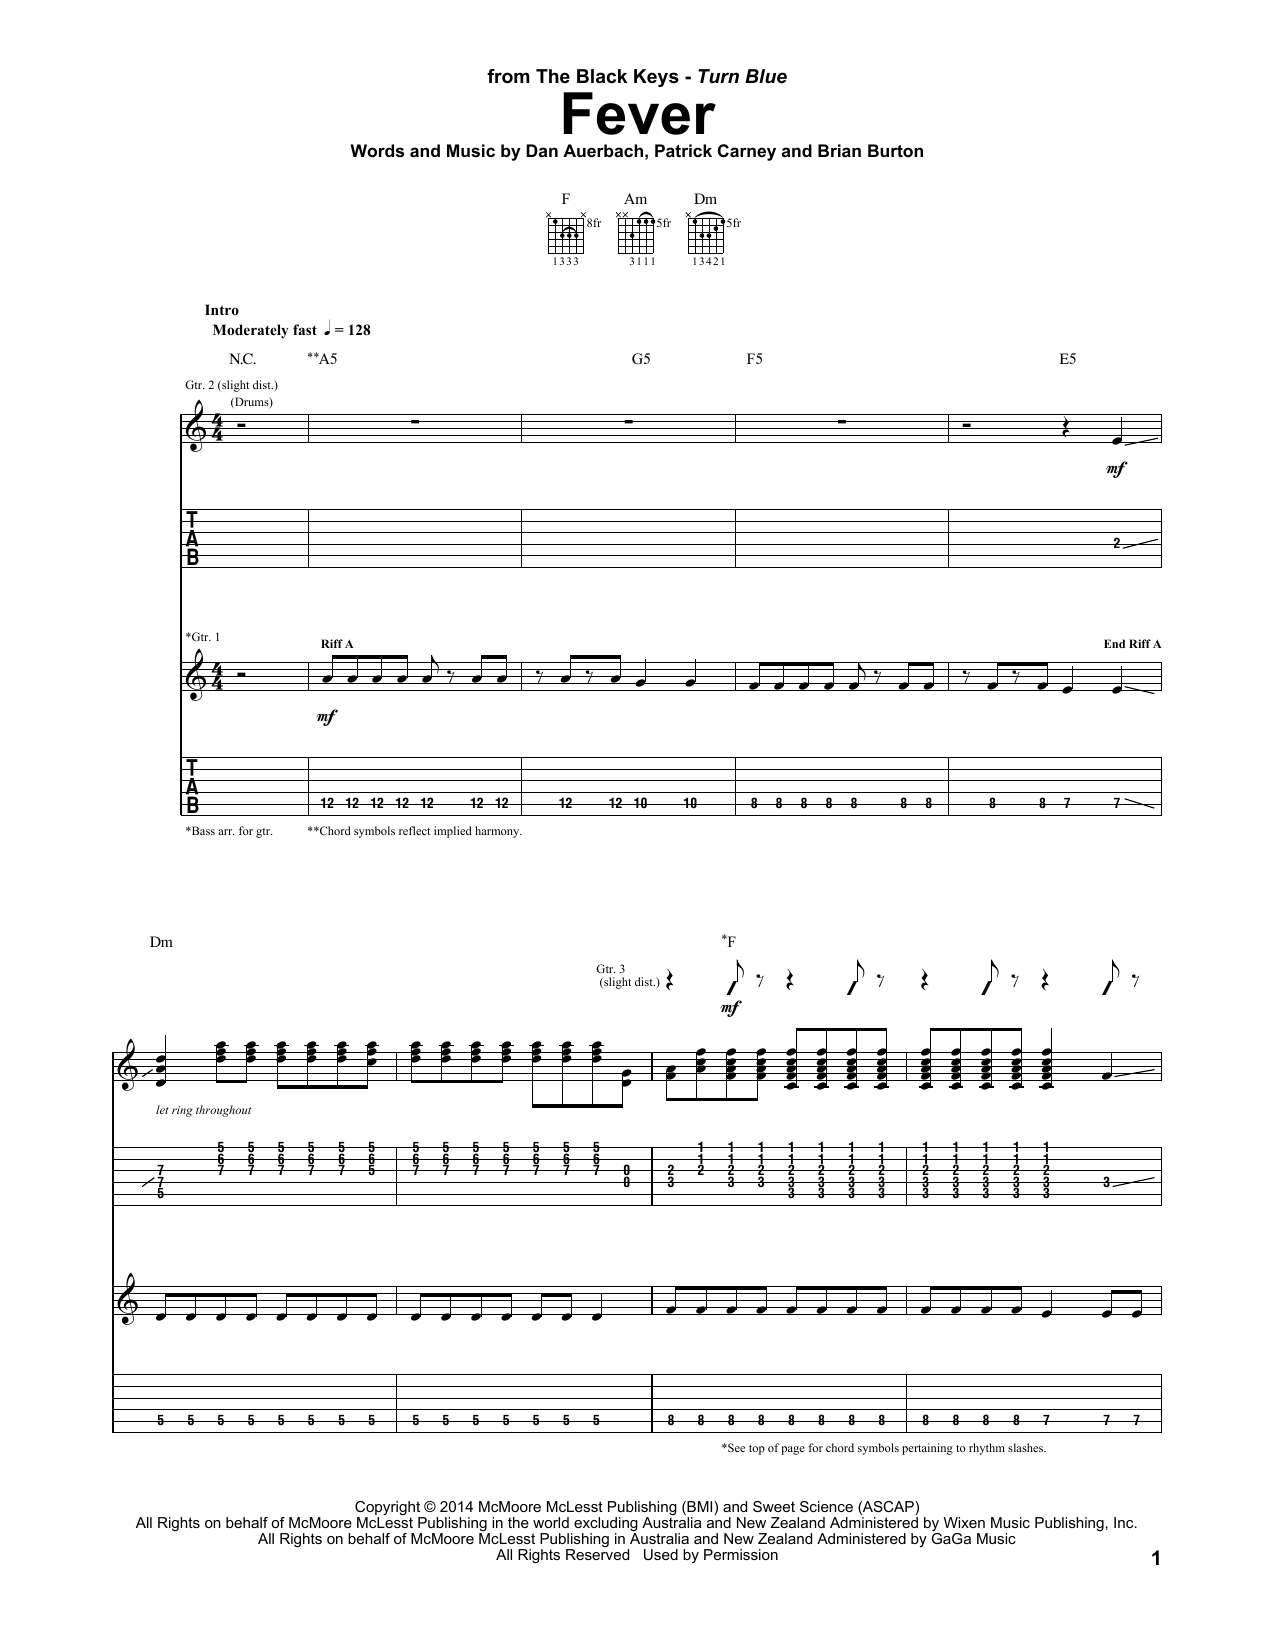 The Black Keys Fever Sheet Music Notes & Chords for Guitar Tab - Download or Print PDF